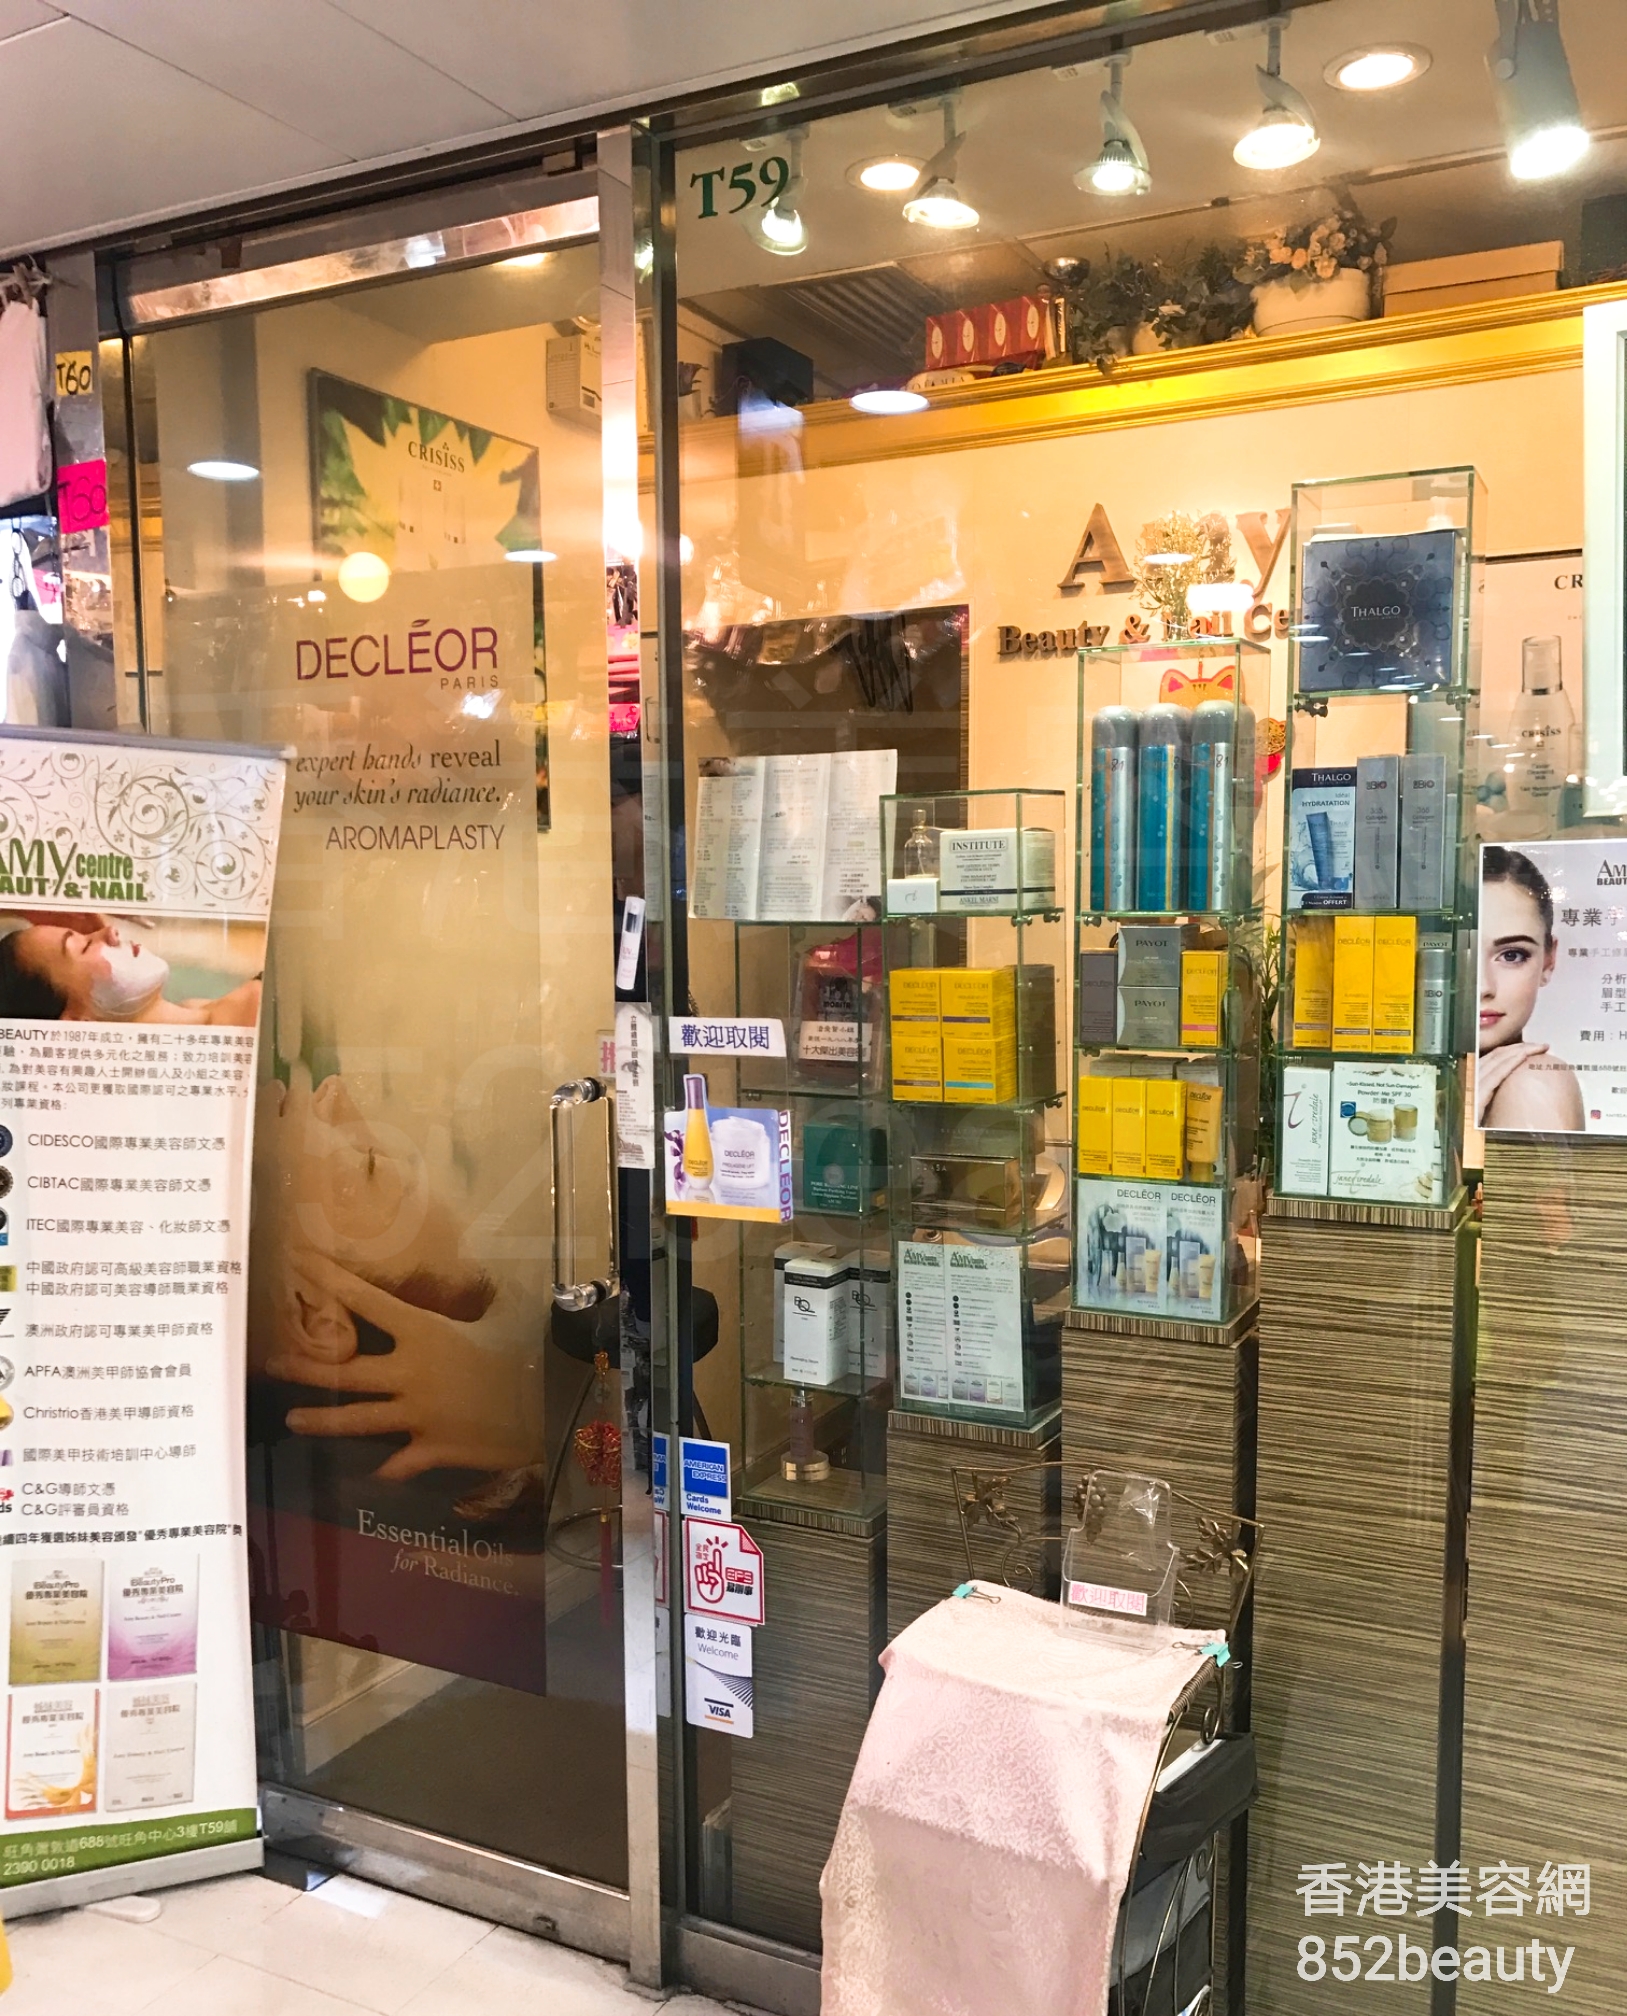 Massage/SPA: Amy Centre Beauty & Nail